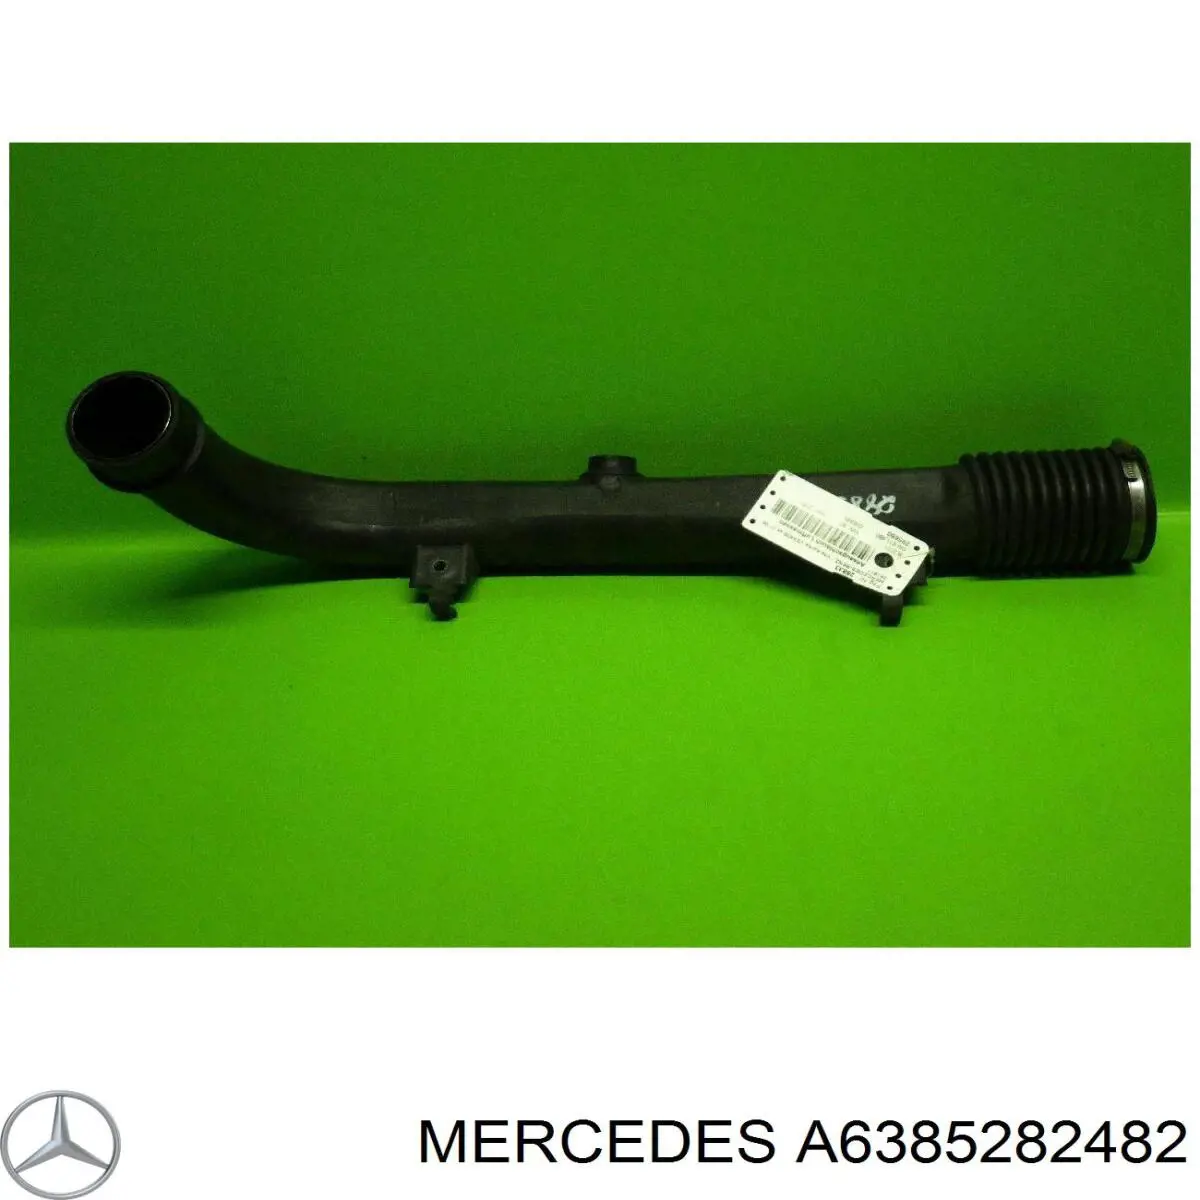 A6385282482 Mercedes tubo flexible de aspiración, salida del filtro de aire